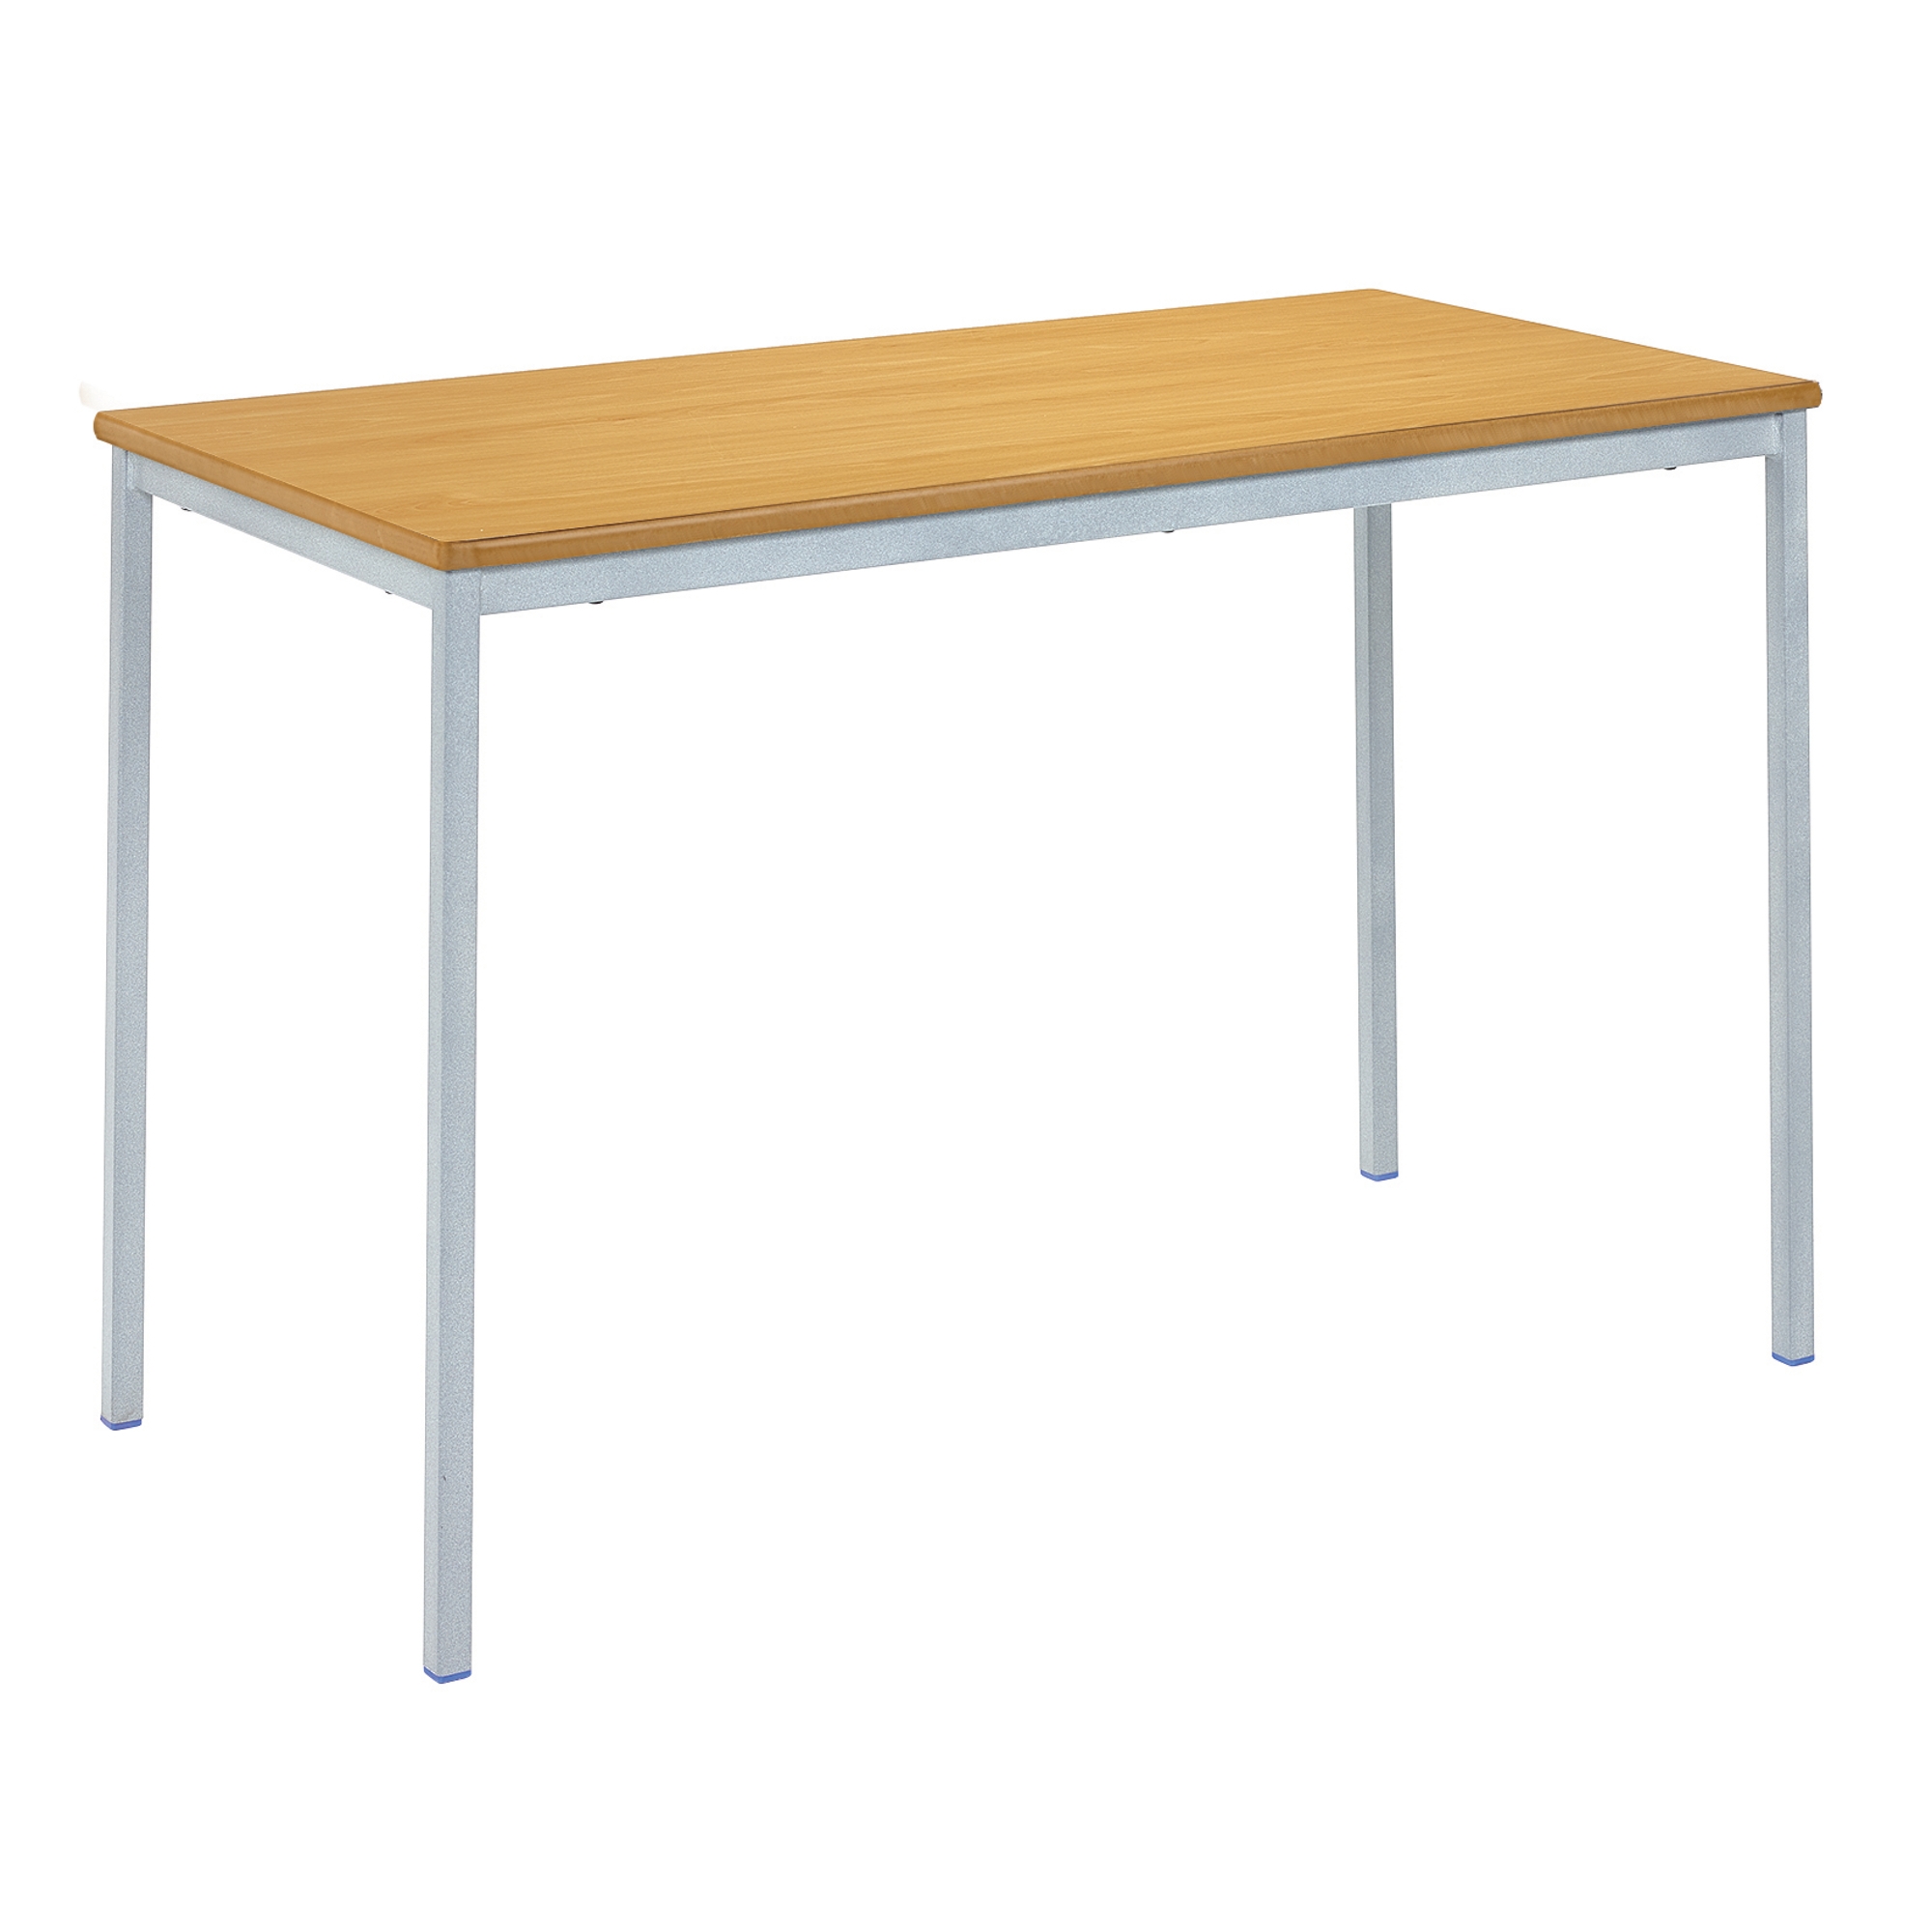 Classmates Rectangular Fully Welded Classroom Table - 1100 x 550 x 590mm - Beech